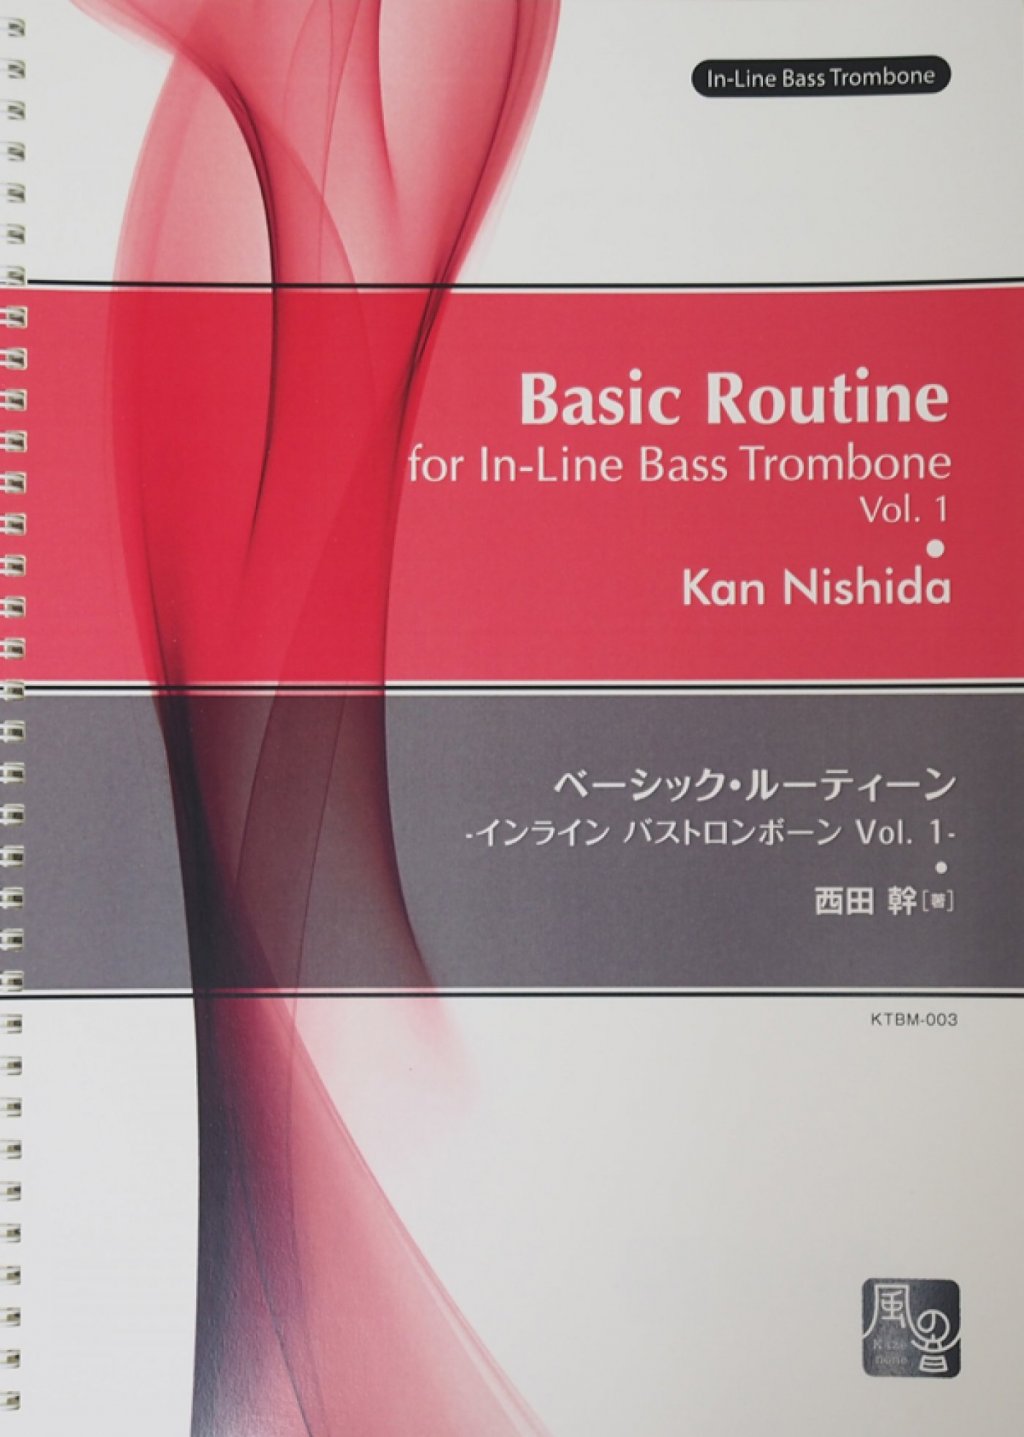 「Basic Routine for In-Line Bass Trombone Vol. 1 ベーシック・ルーティーン Vol.1《インライン バストロンボーン》 」 画像 1